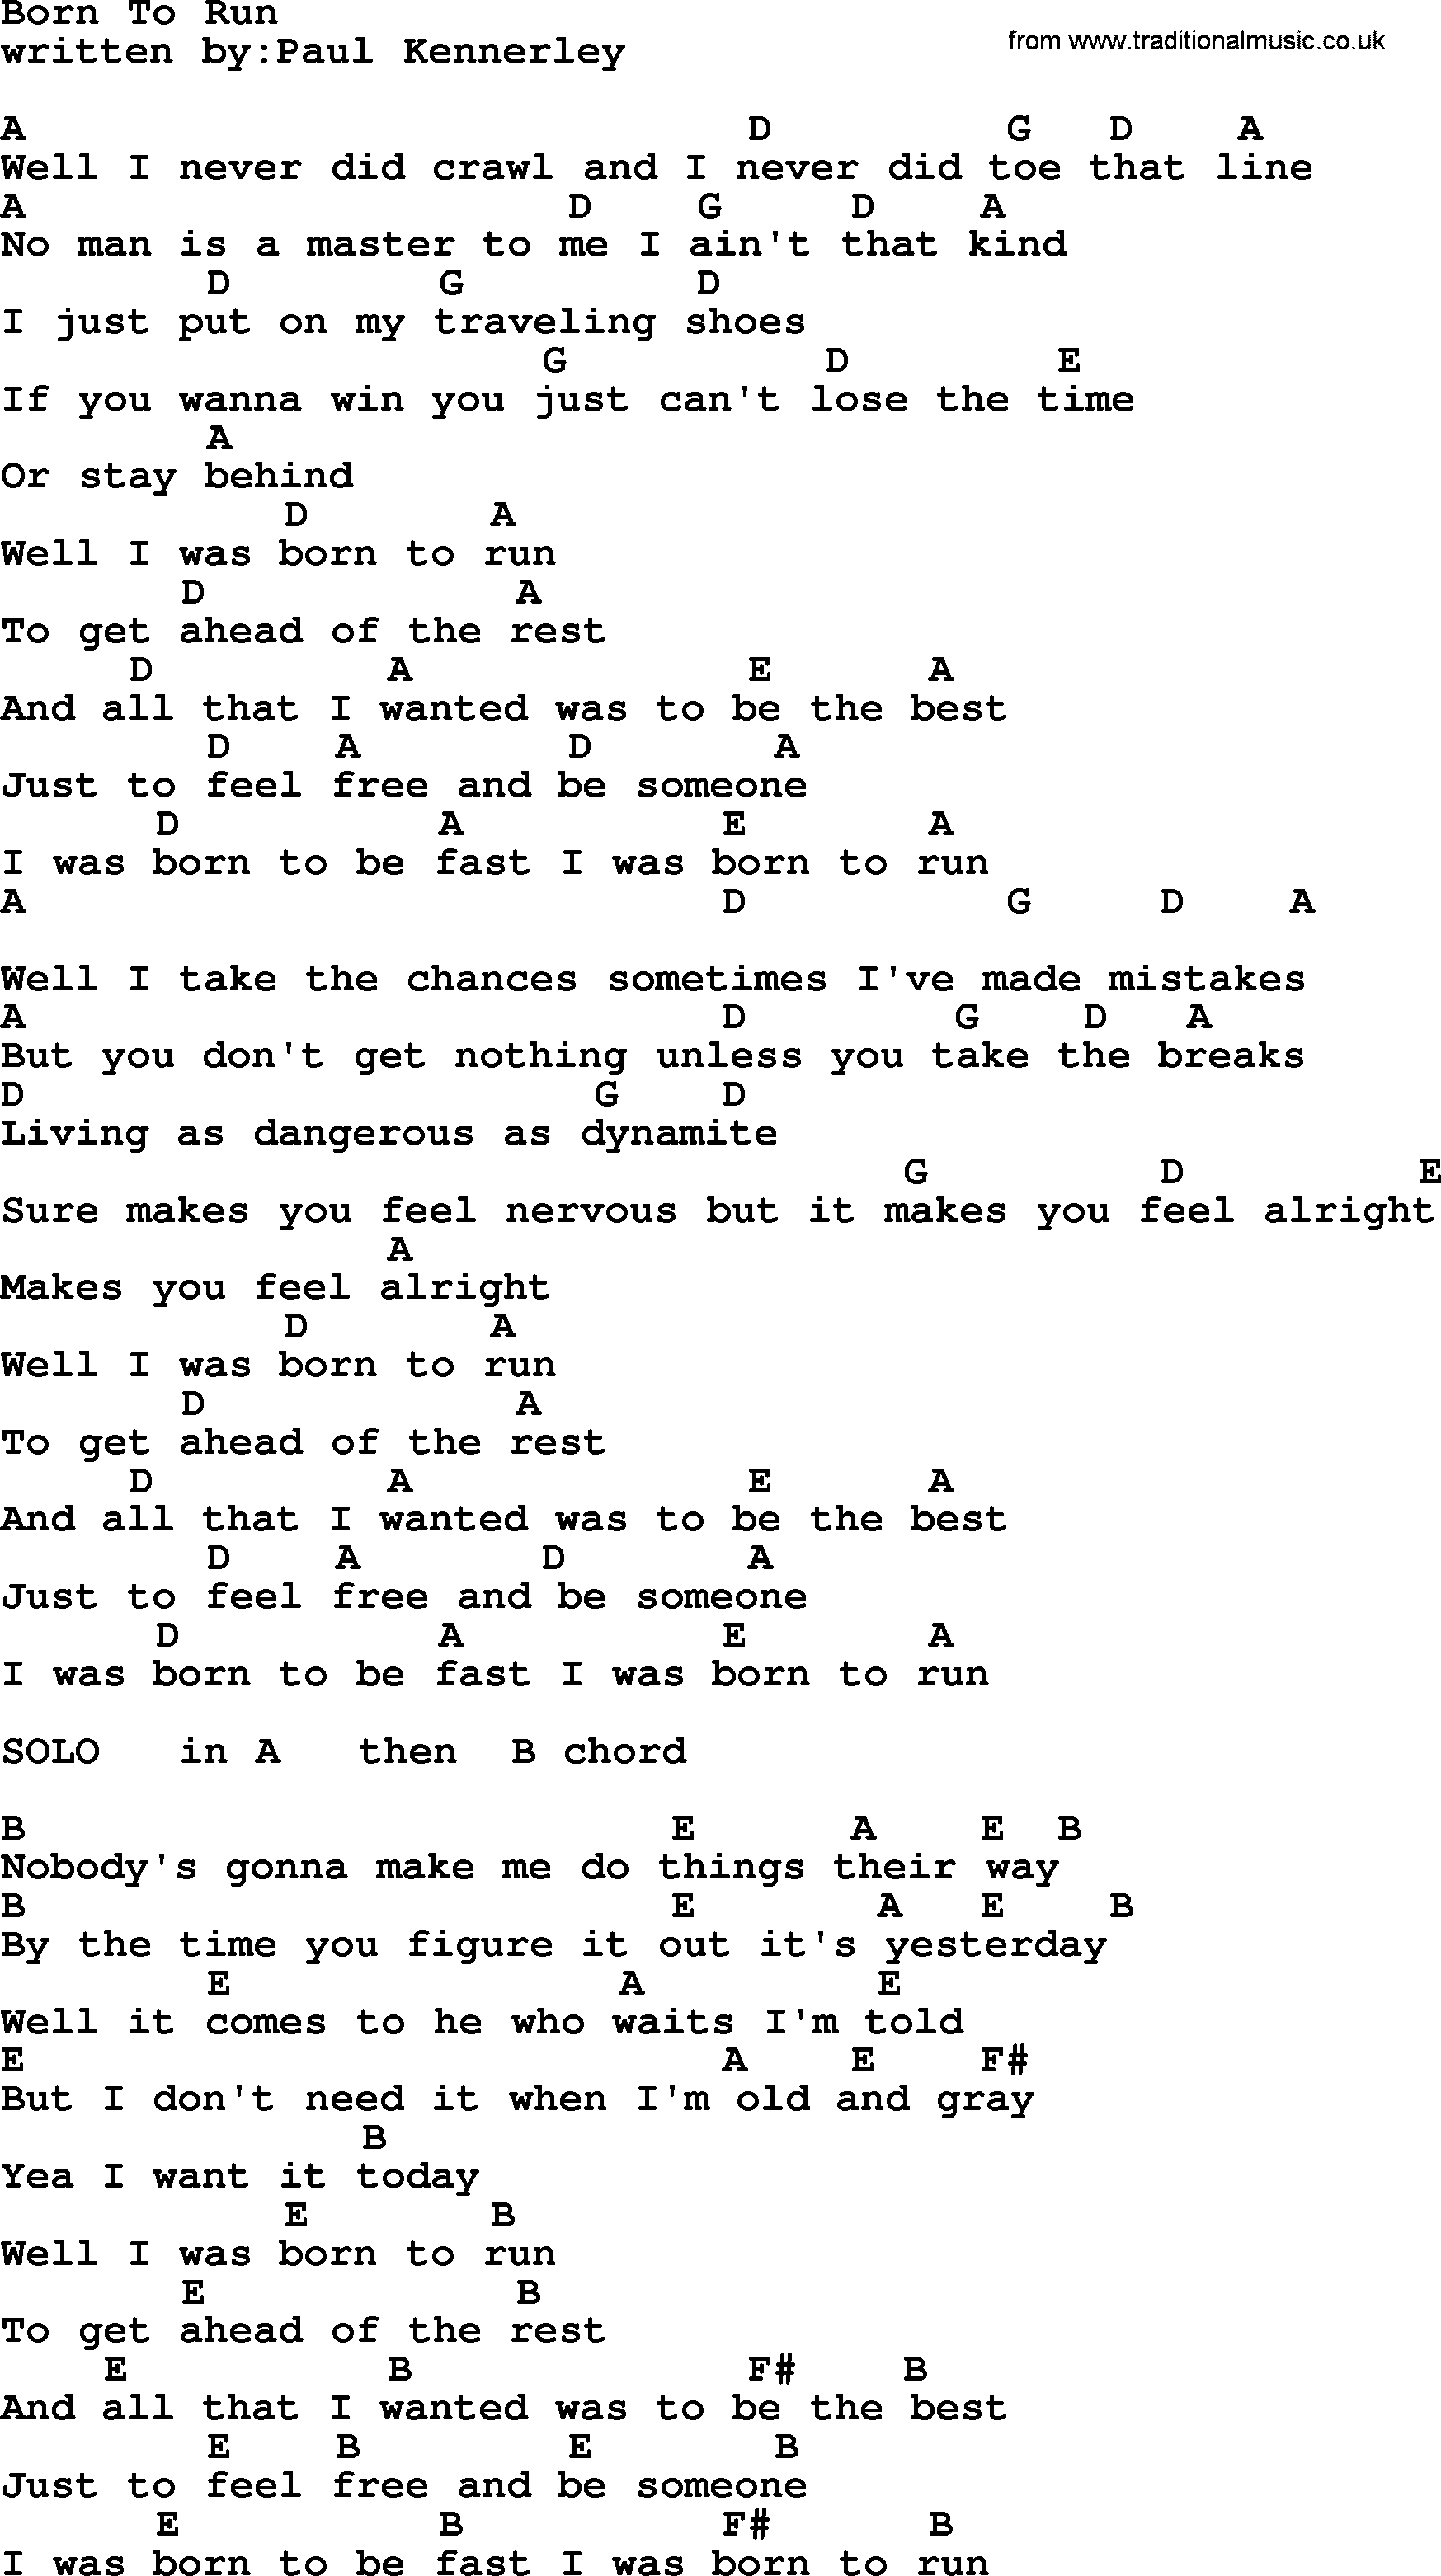 Emmylou Harris song: Born To Run lyrics and chords